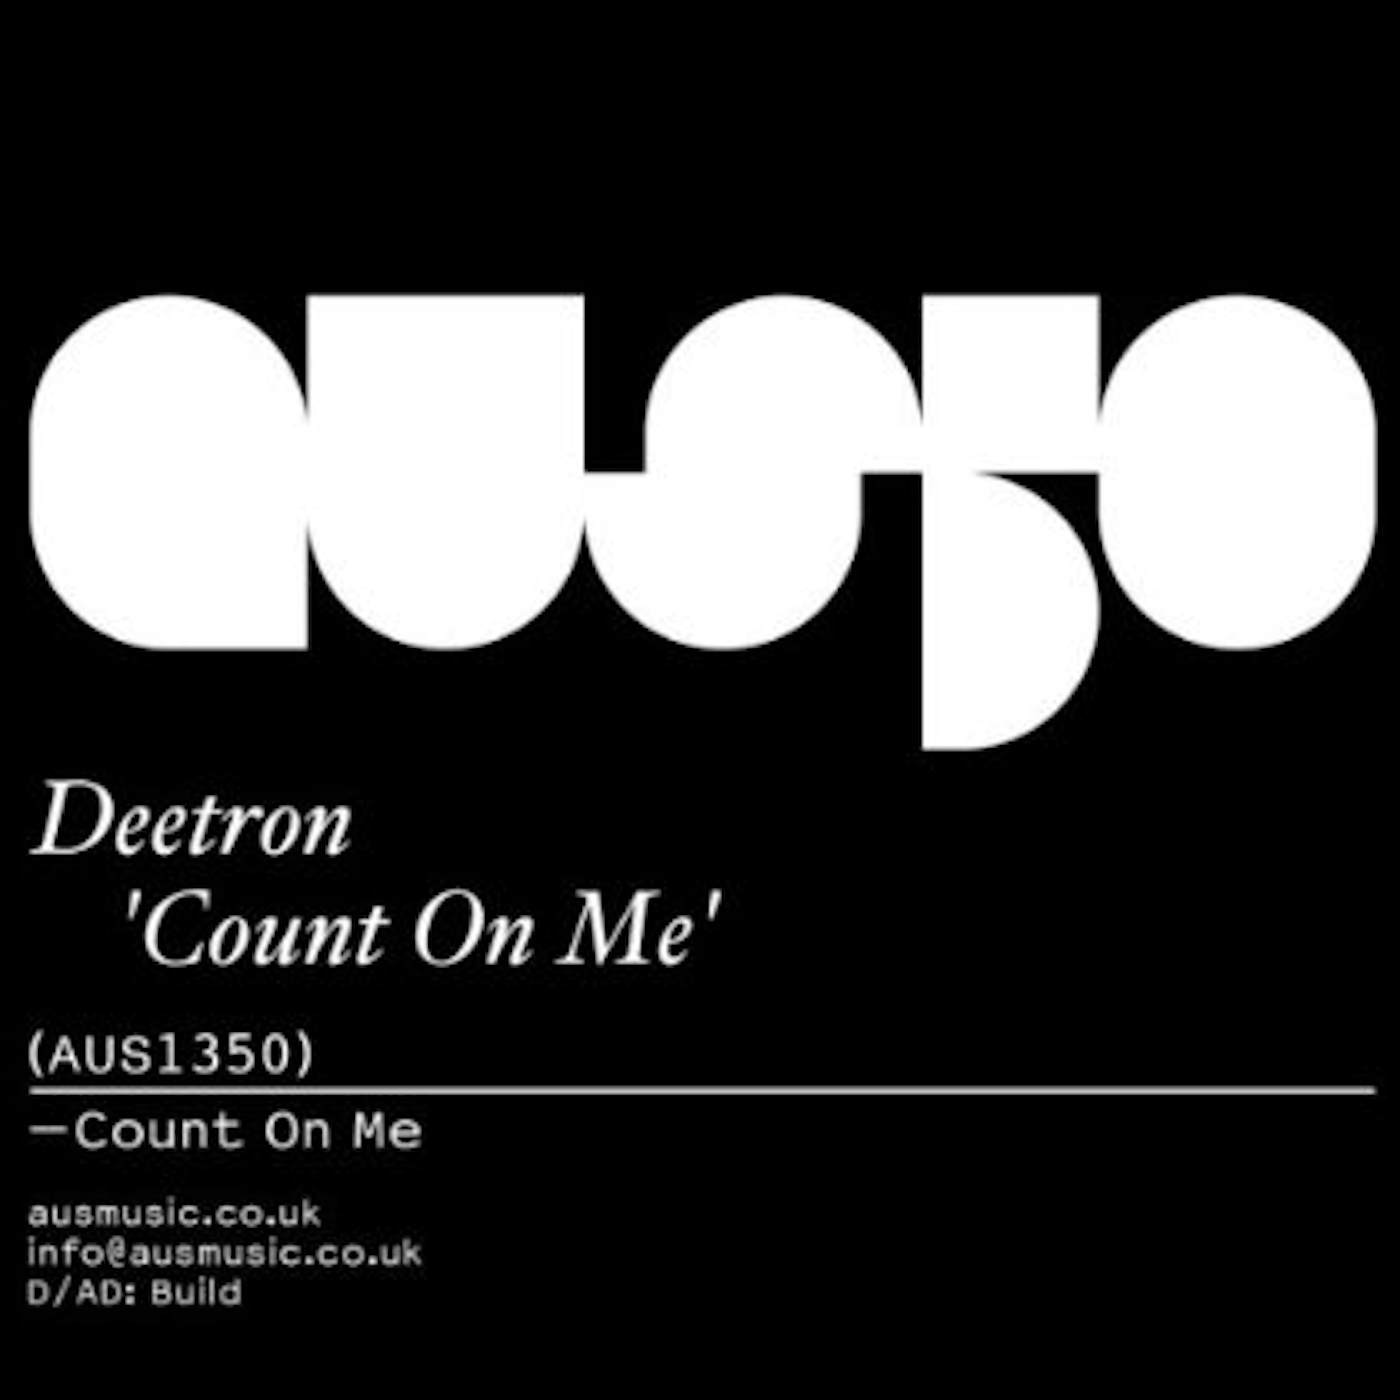 Deetron Count On Me Vinyl Record